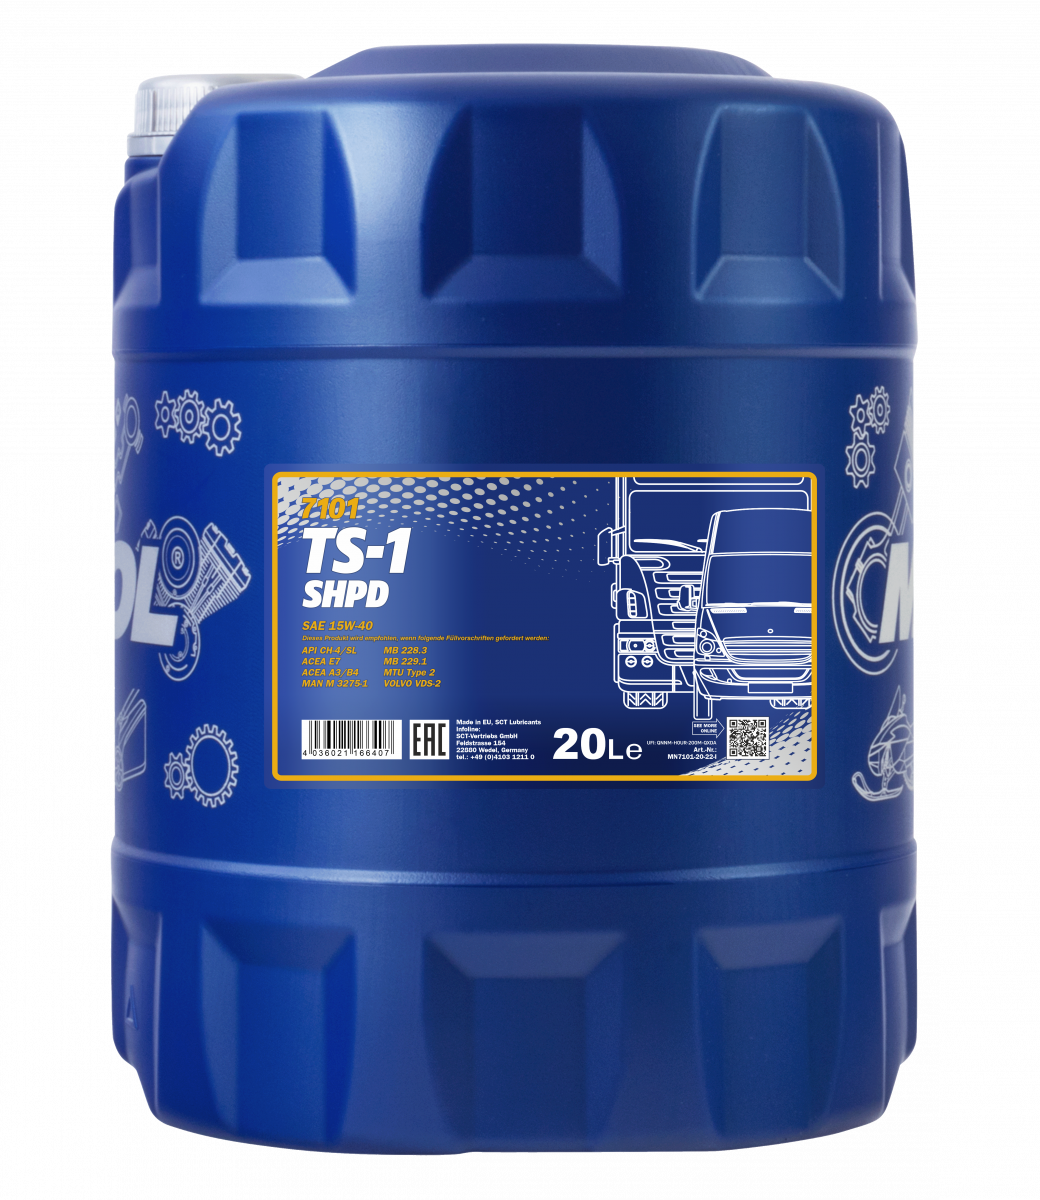 Моторное масло Mannol TS-1 SHPD 15W-40 20л